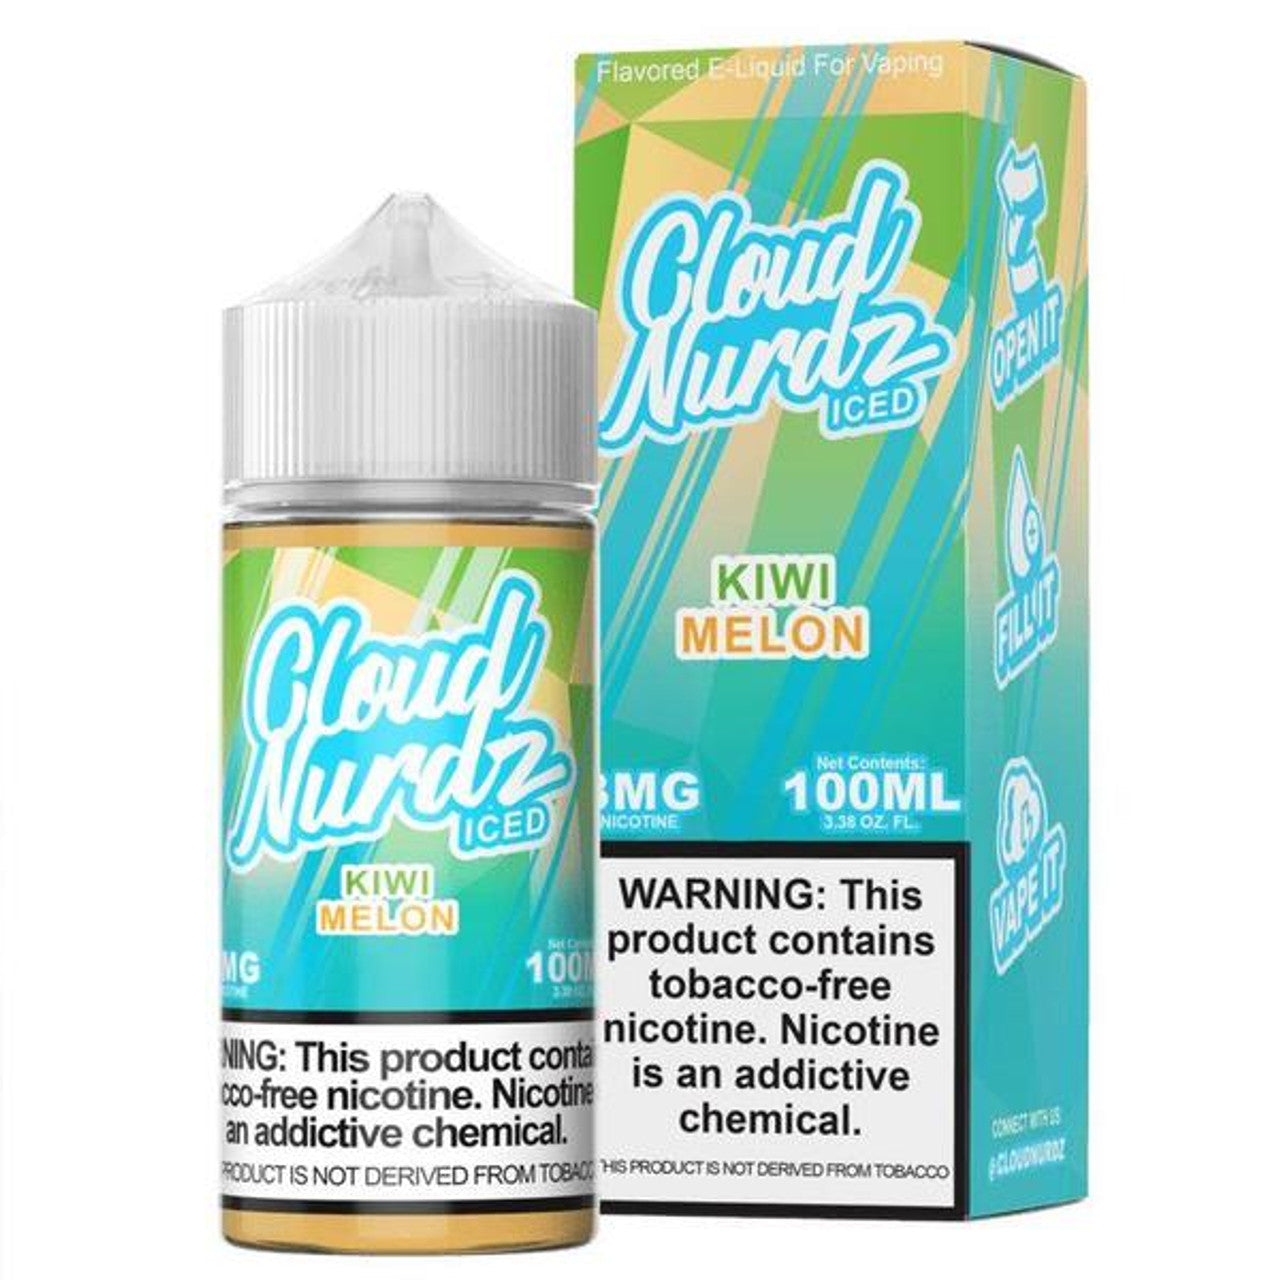 CLOUD NURDZ E-LIQUID KIWI MELON ICED - 100ML - E-Juice Steals